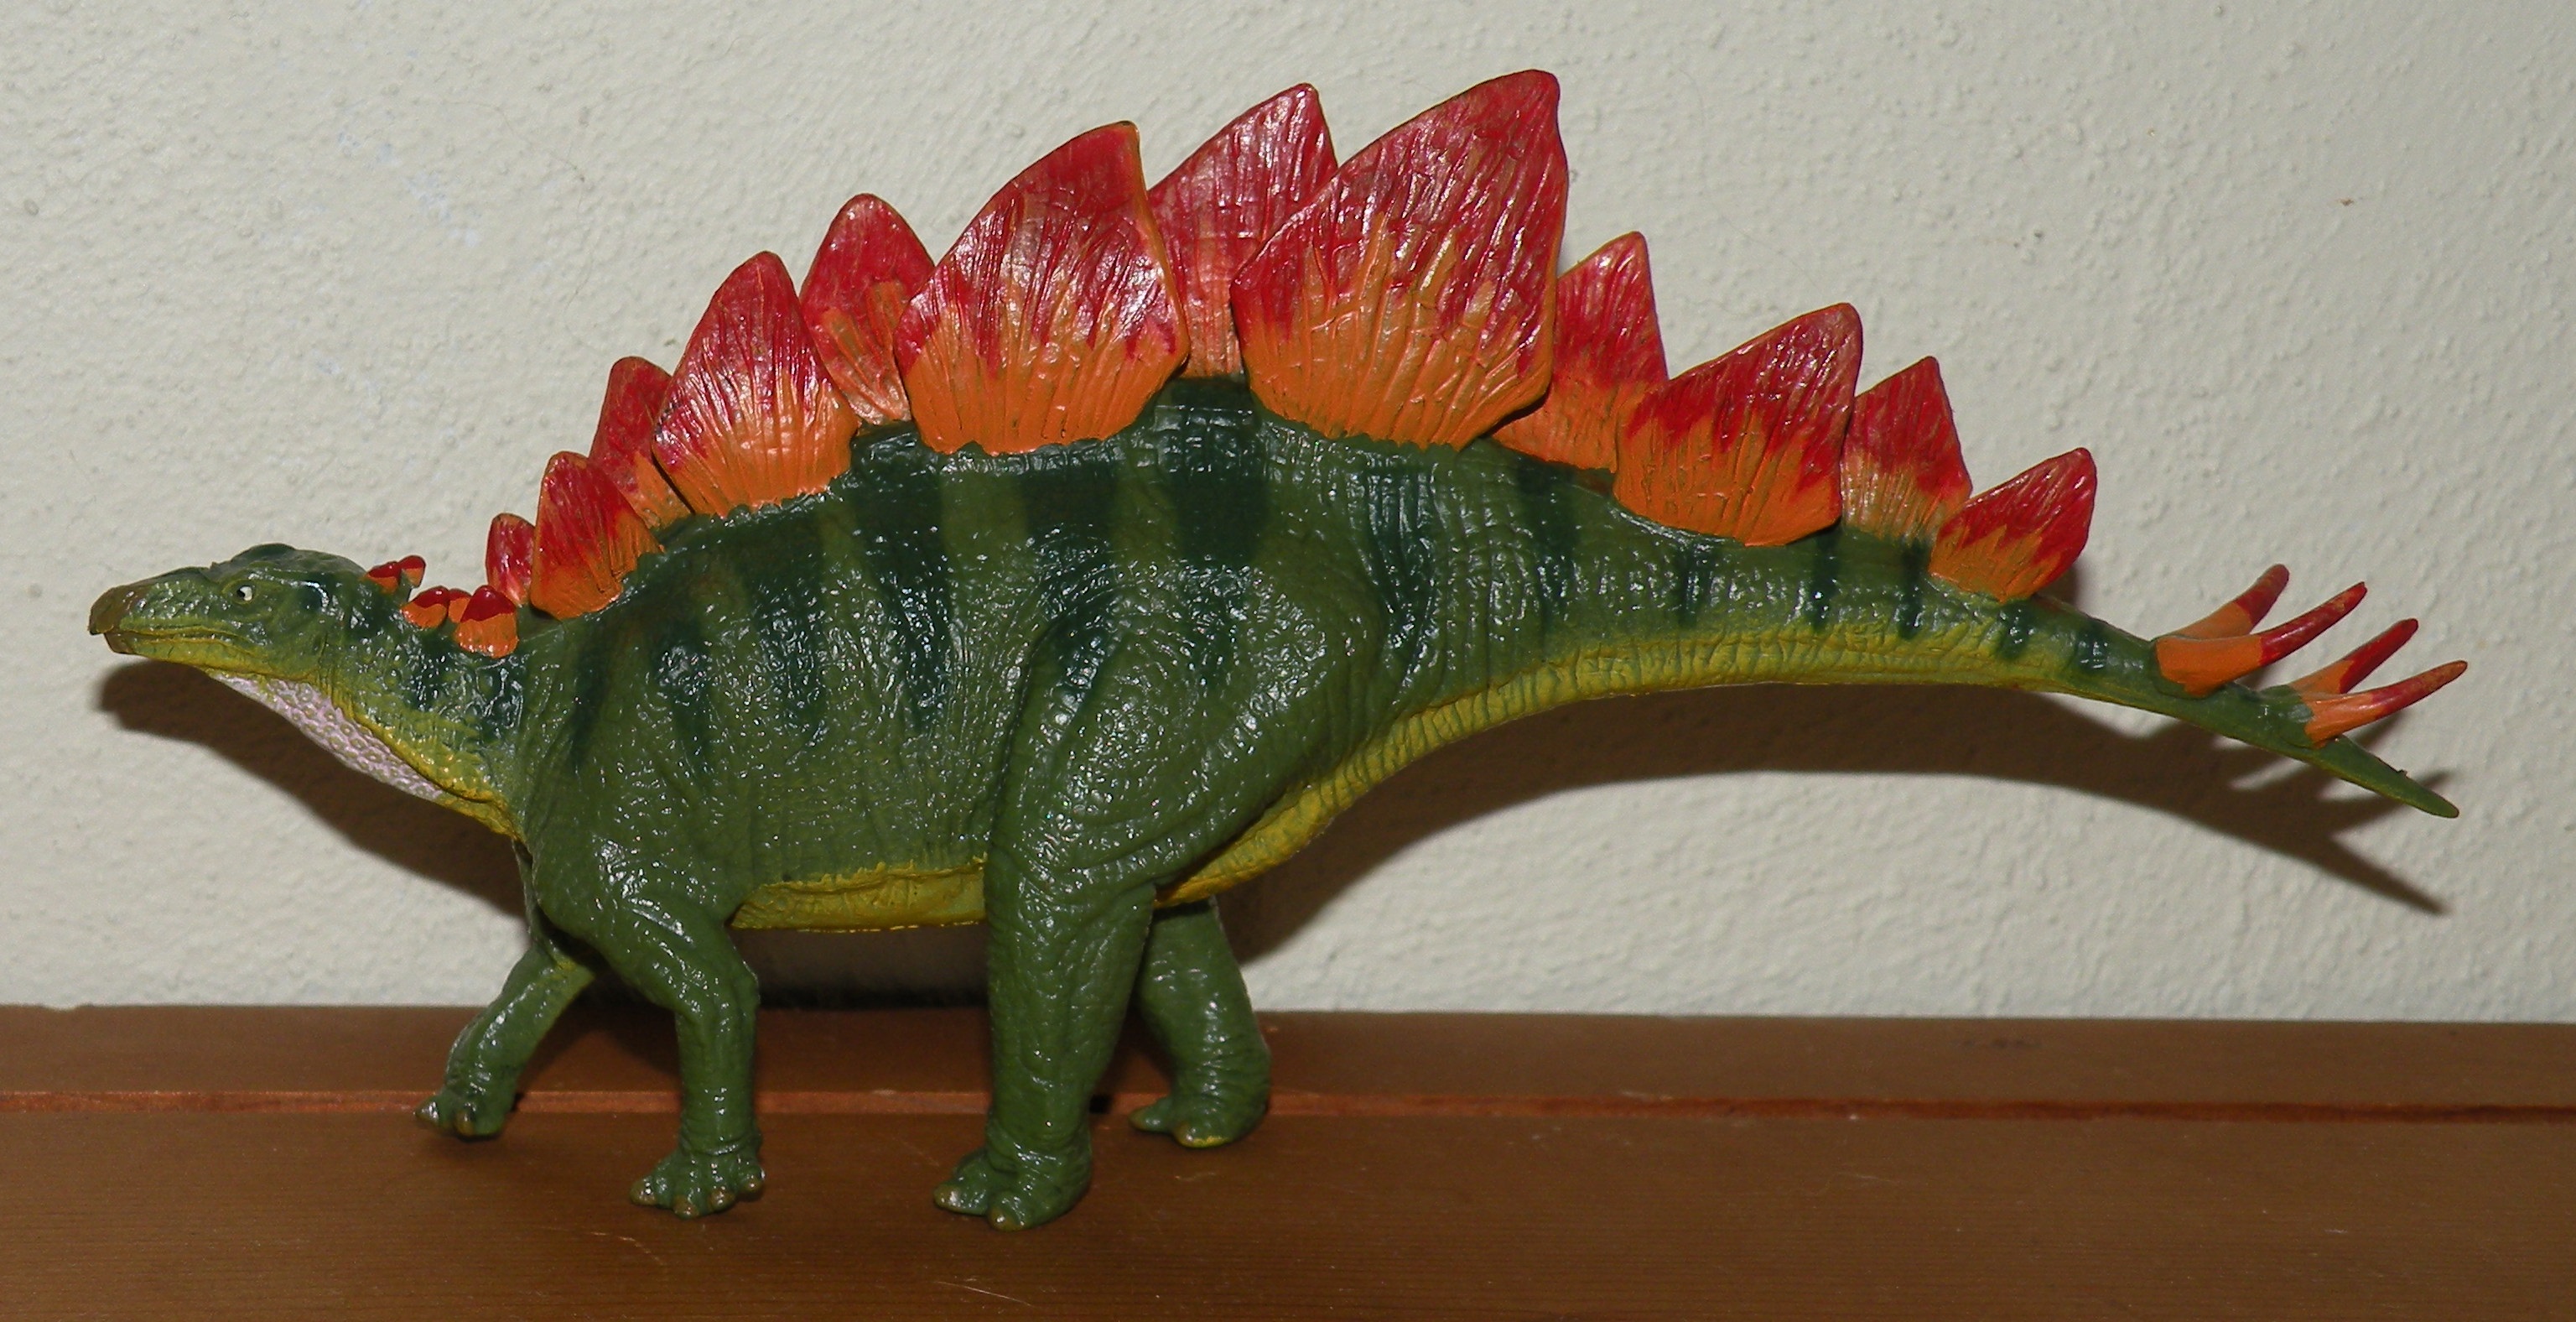 Reply #5 - Re: Definitive Allosaurus and Stegosaurus? 